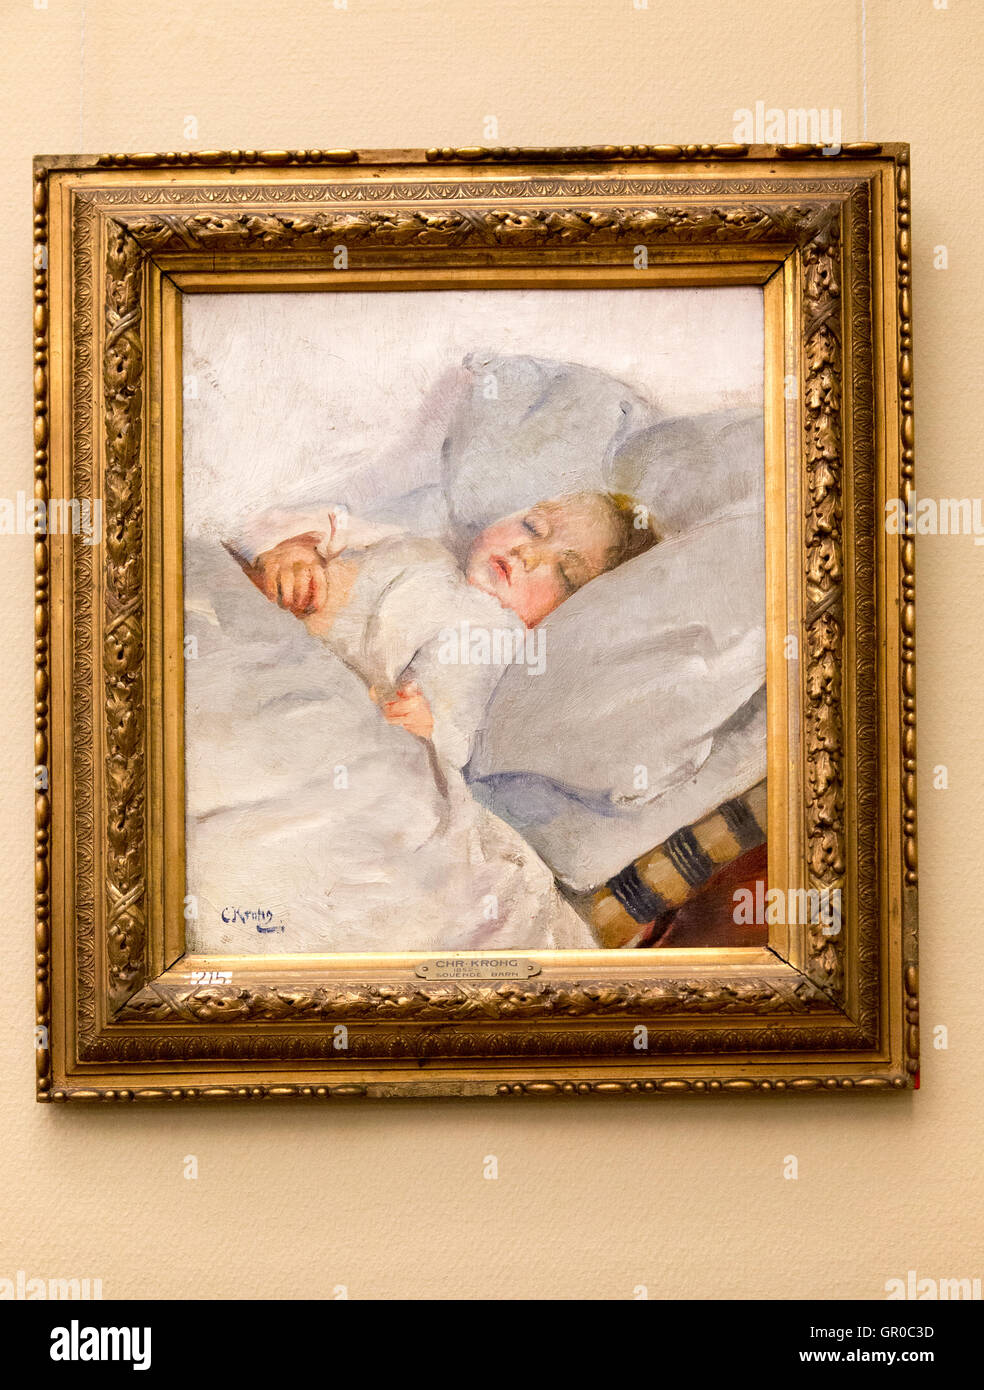 Bambino dormiente' 1882 olio su tela da Christian Krohg 1852-1925, Kode 3  art gallery Bergen, Norvegia Foto stock - Alamy